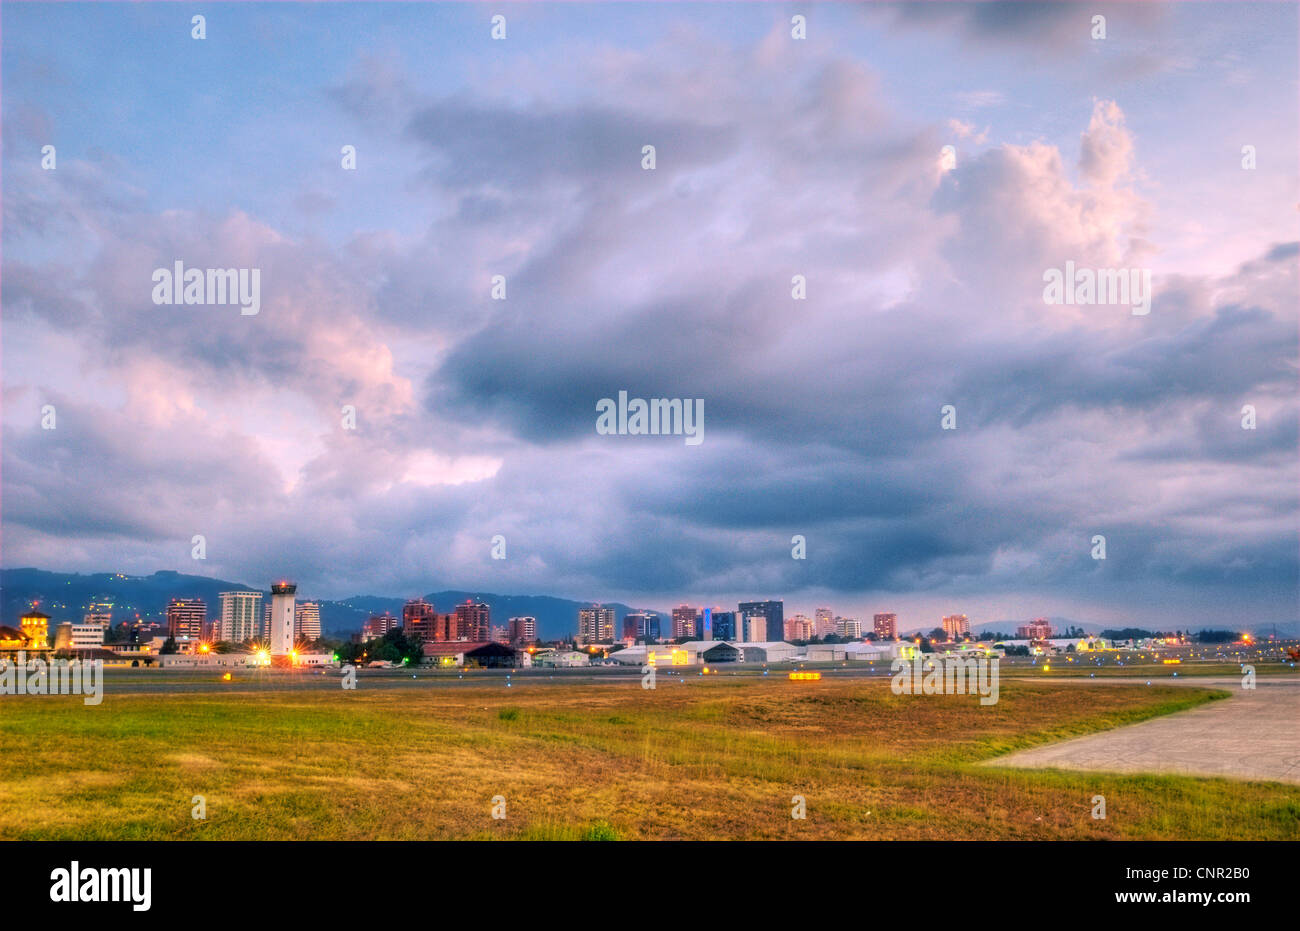 Guatemala City's Zona 14 skyline seen from the tarmac at La Aurora International Airport (GUA). Stock Photo